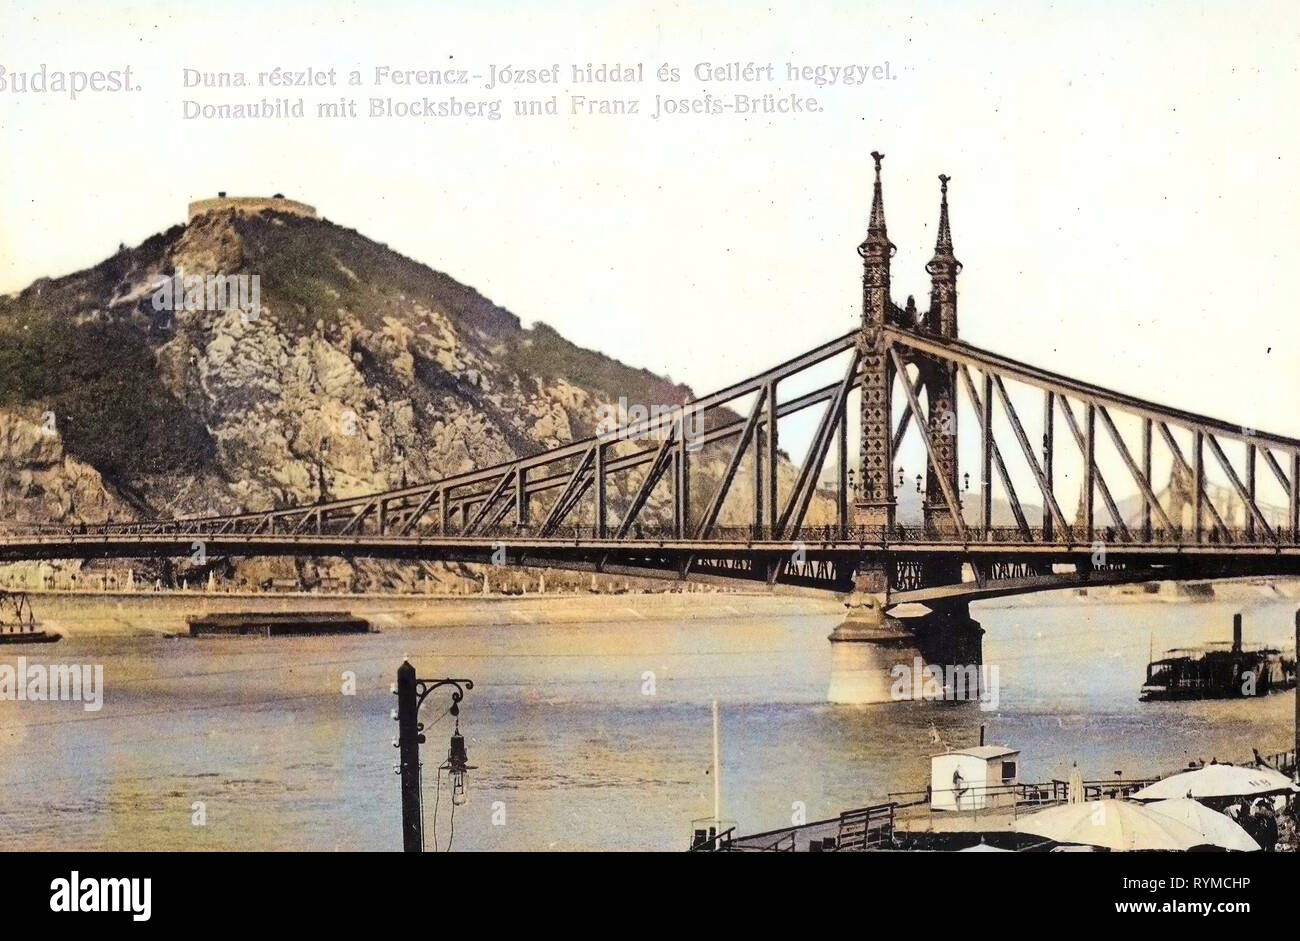 Historical images of Liberty Bridge, Budapest, Historical photographs of Gellért Hill, 1906, Donau mit Blocksberg und Josefsbrücke, Hungary Stock Photo